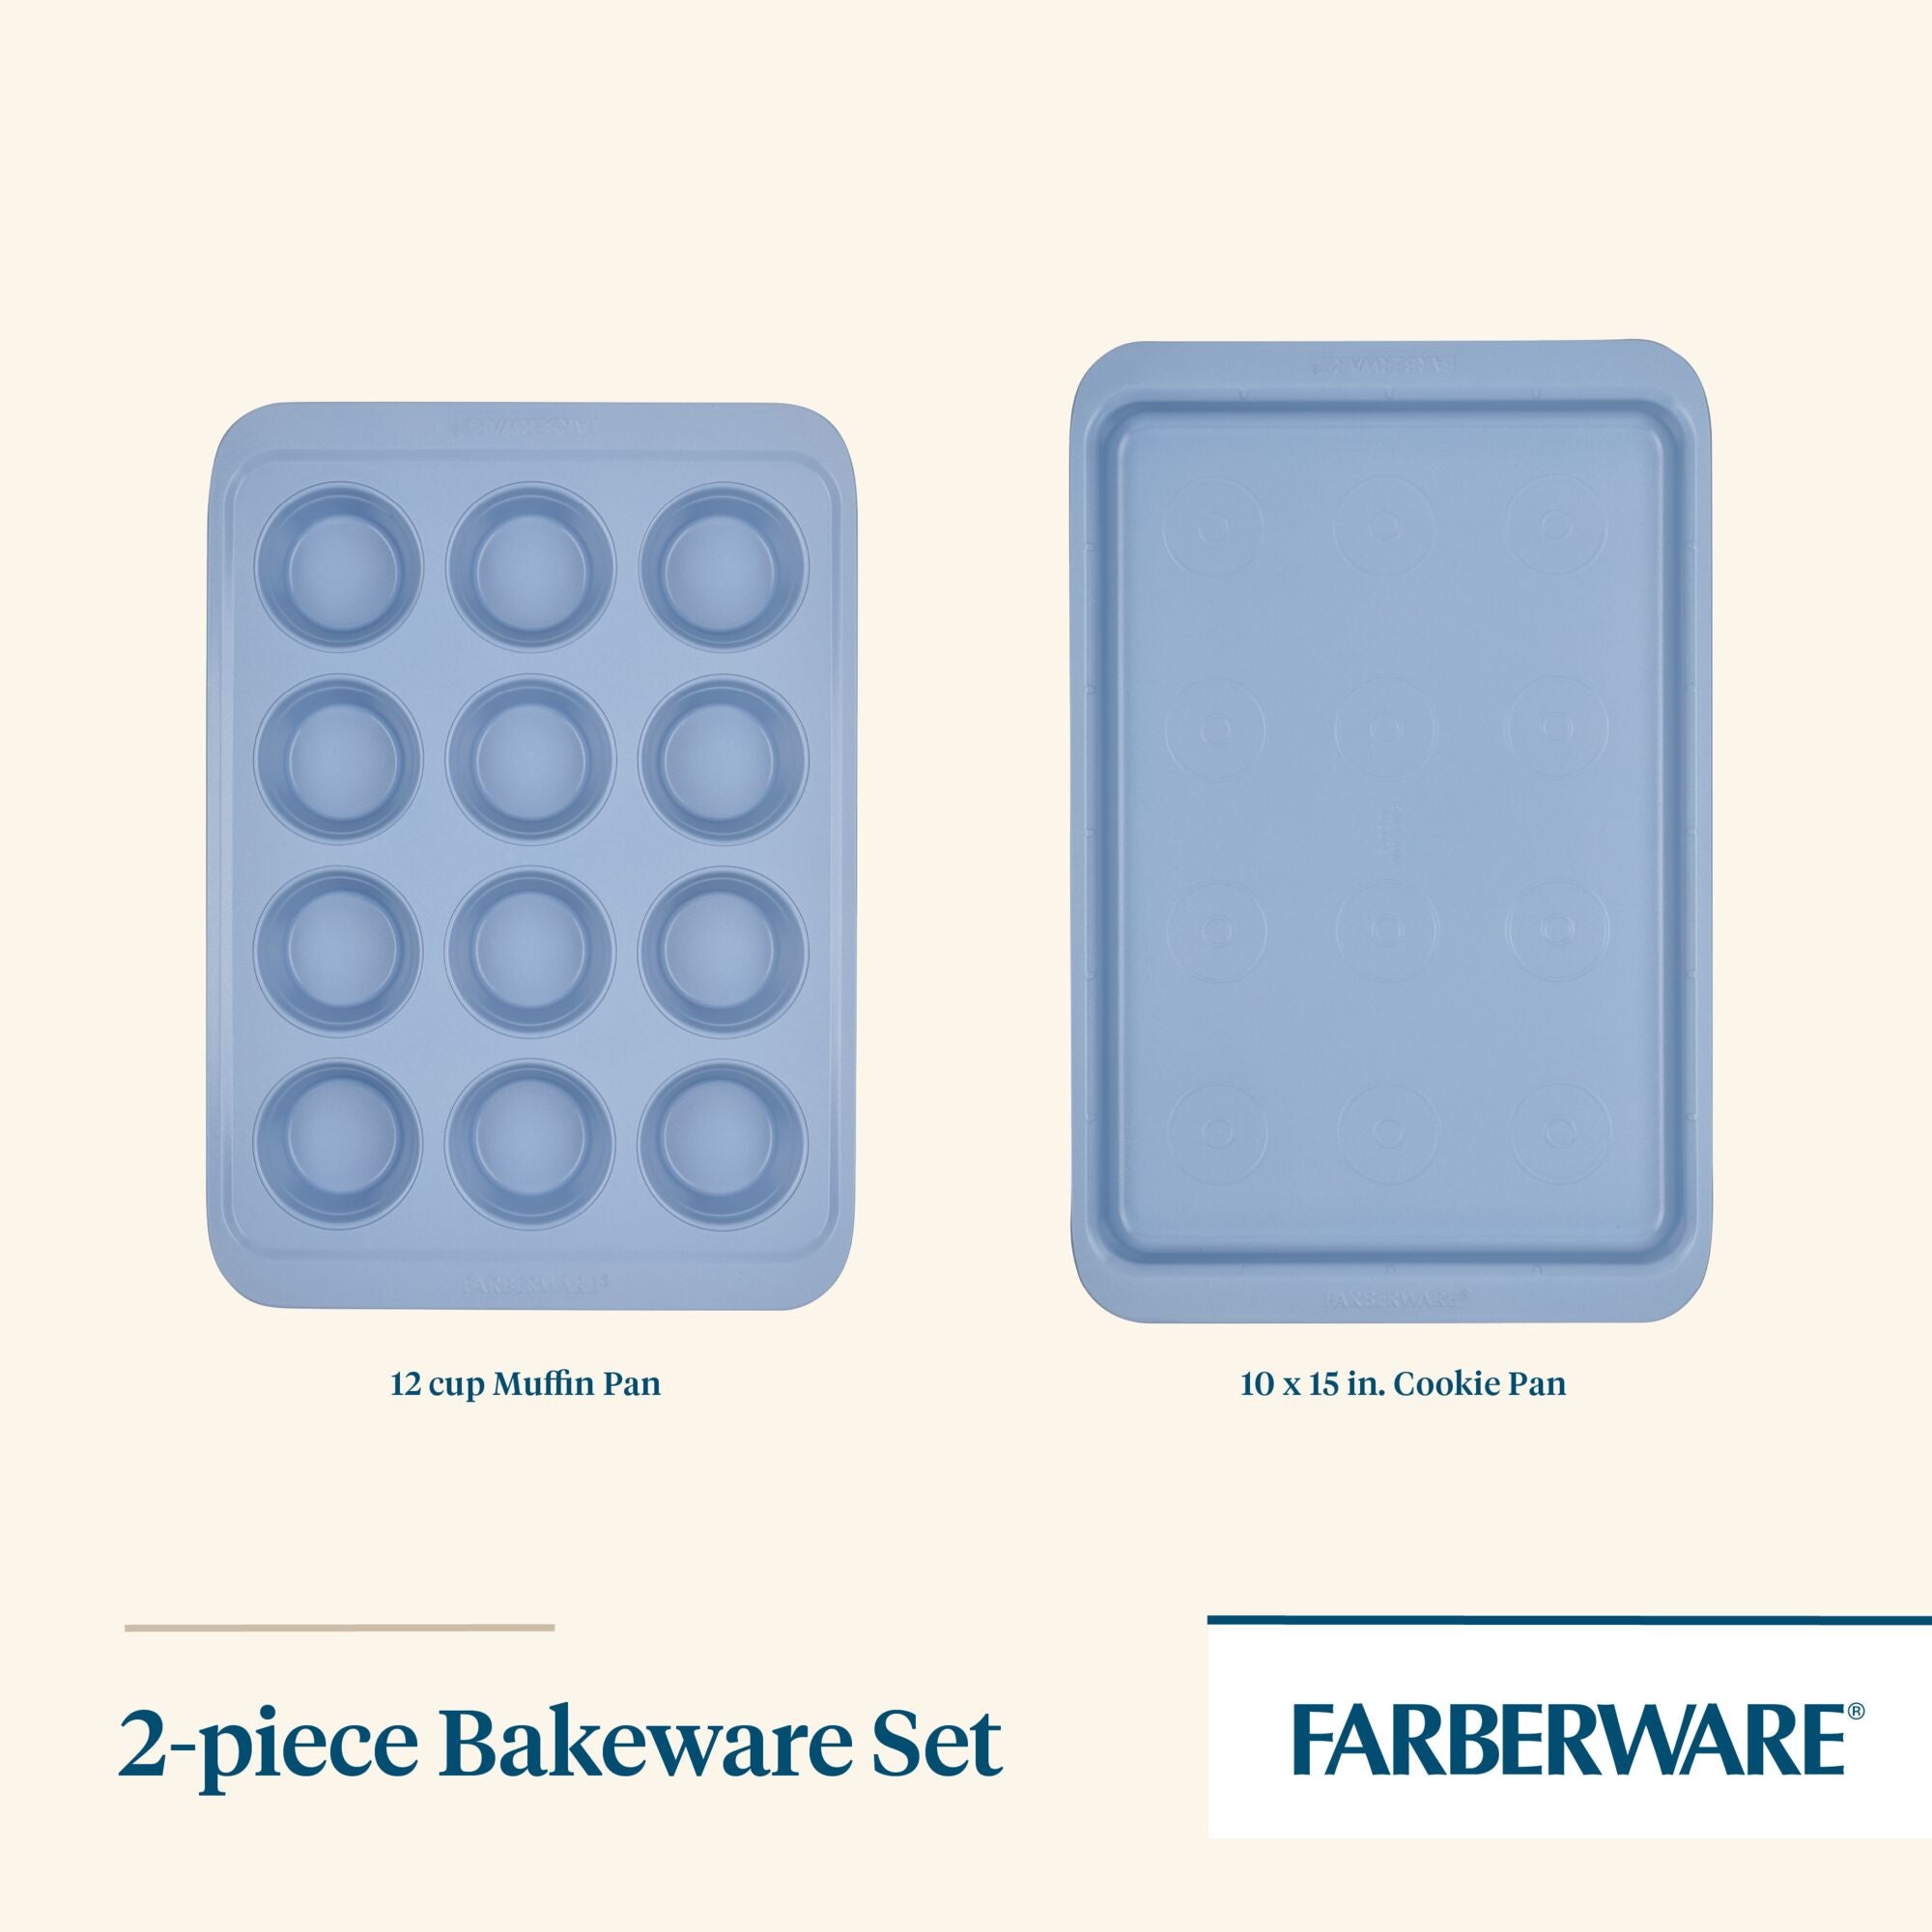 Farberware Steel 11 x 17 and 10 x 15 Nonstick Baking Sheet, Blue